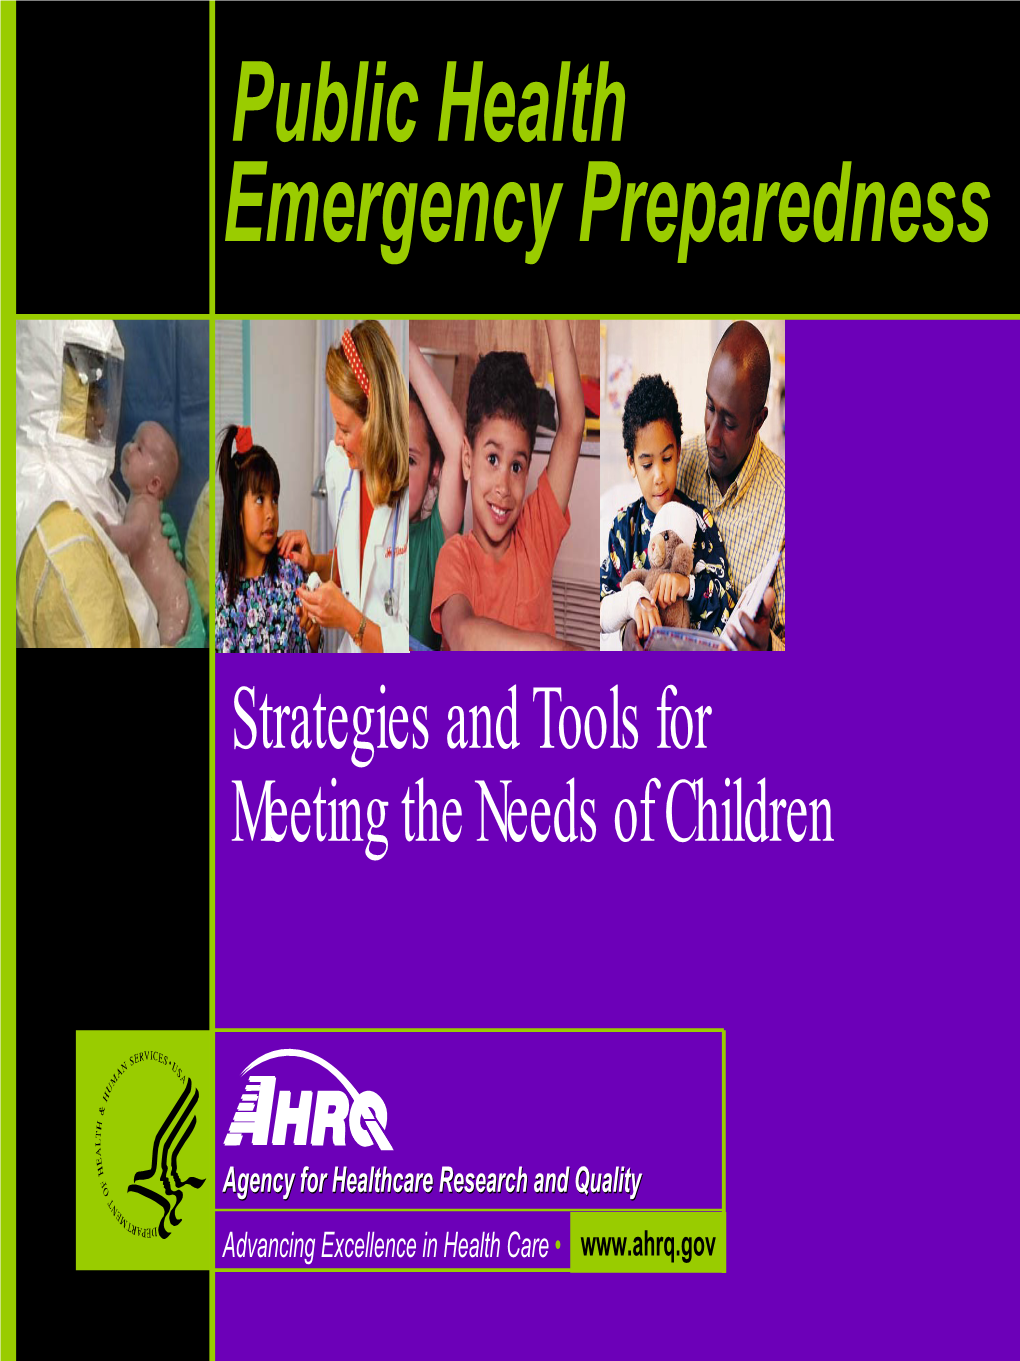 AHRQ Emergency Preparedness Webcast 01-11-05